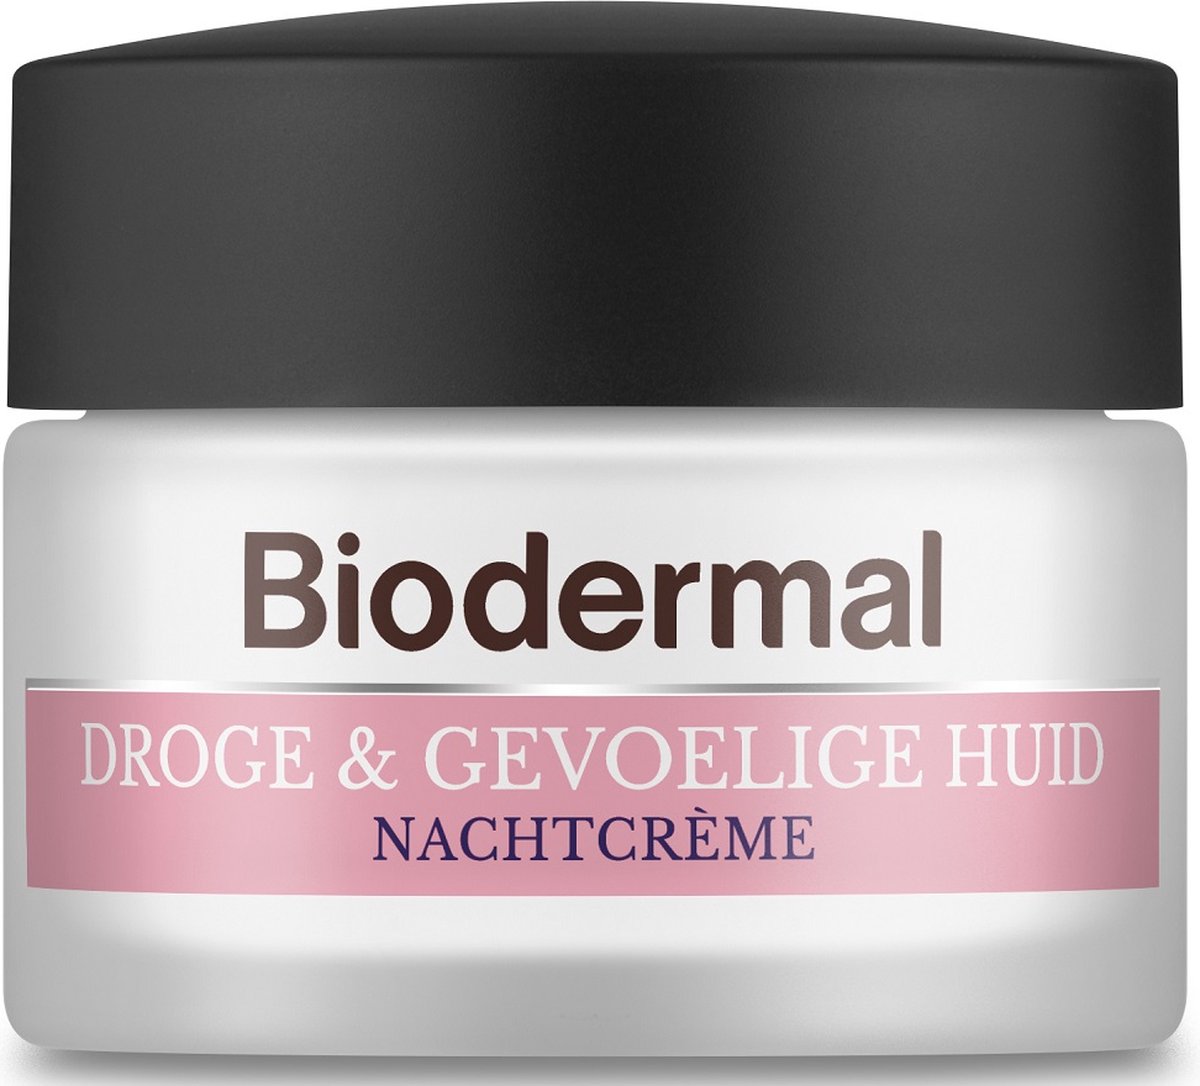 Biodermal Nachtcrème Droge & Gevoelige Huid - Hydrateert en herstelt - 50ml